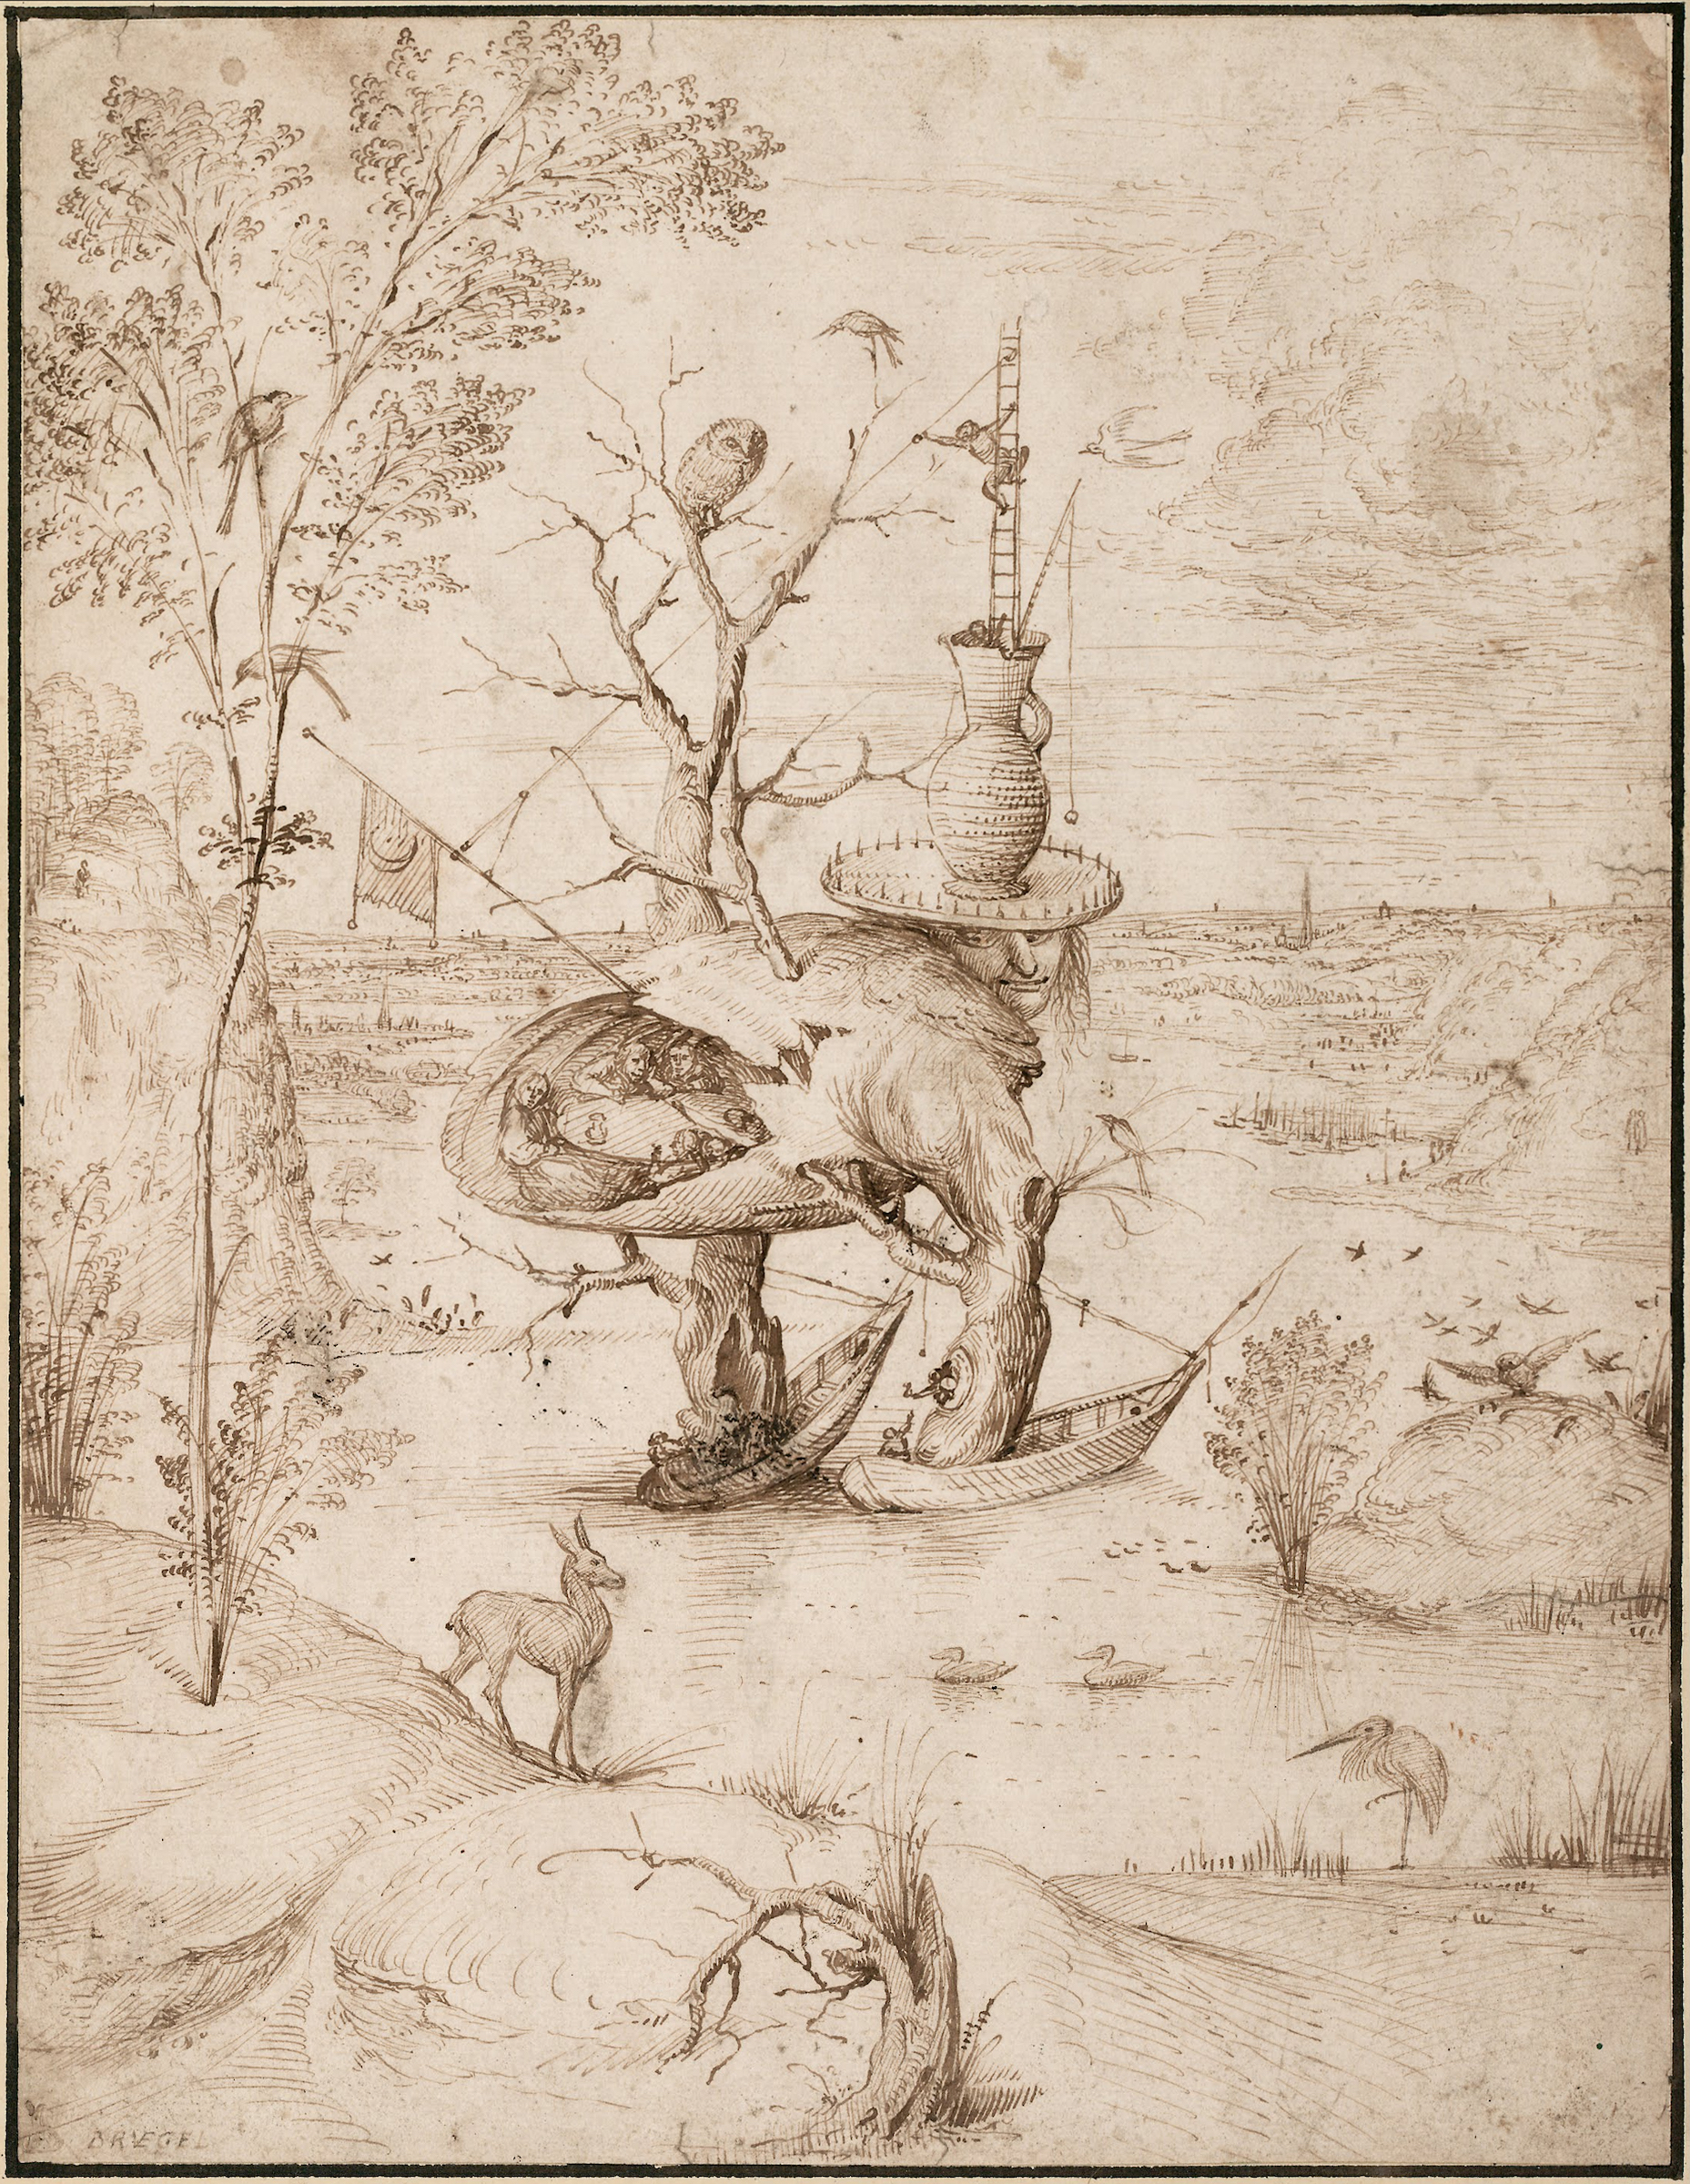 Ağaç Adam (orig. "The Tree-Man") by Hieronymus Bosch - 1500 - 27,7 x 21,1 cm Europeana